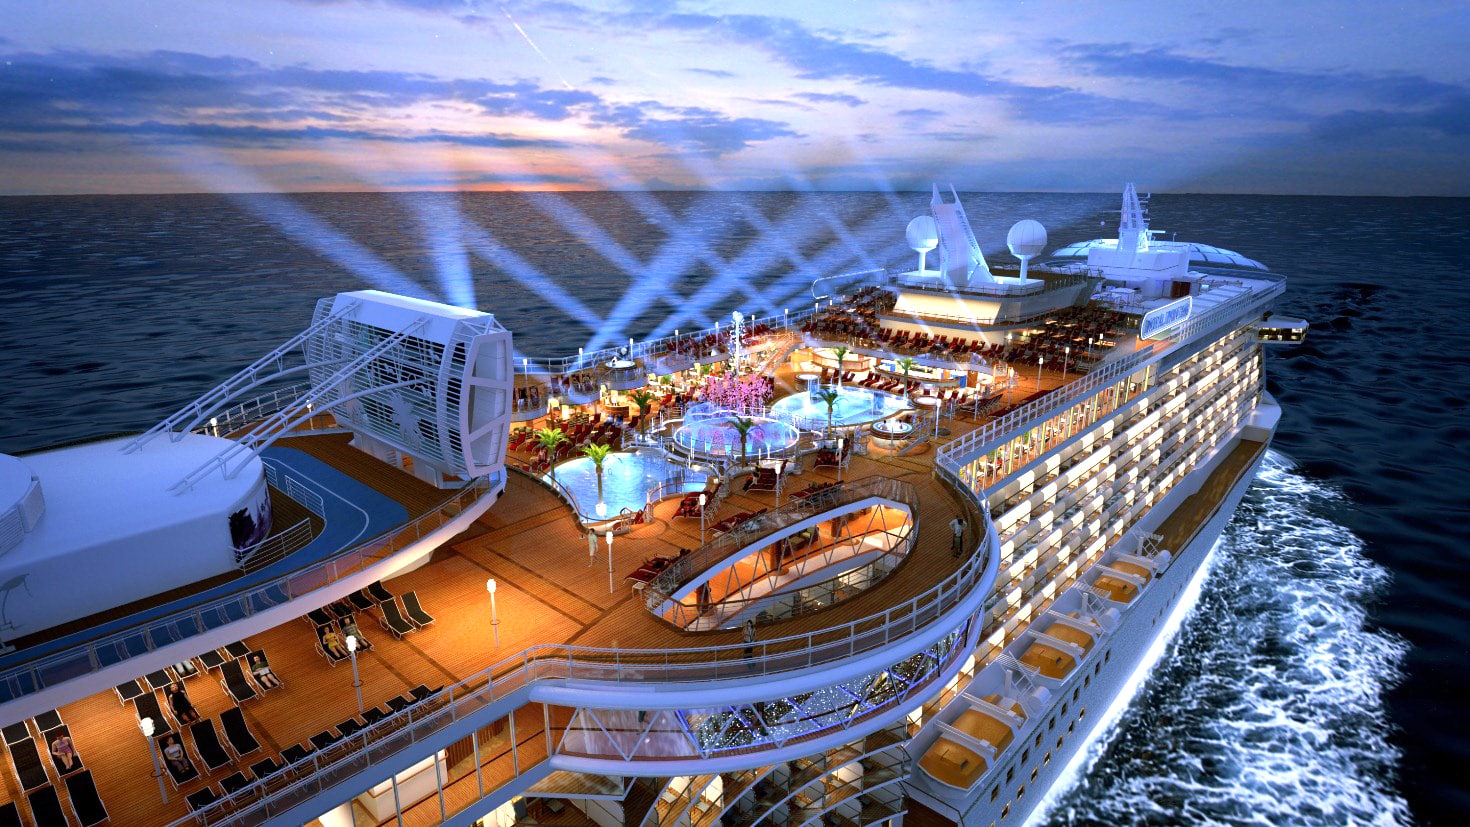 Black Friday Cyber Monday Travel Deals: Princess Cruises